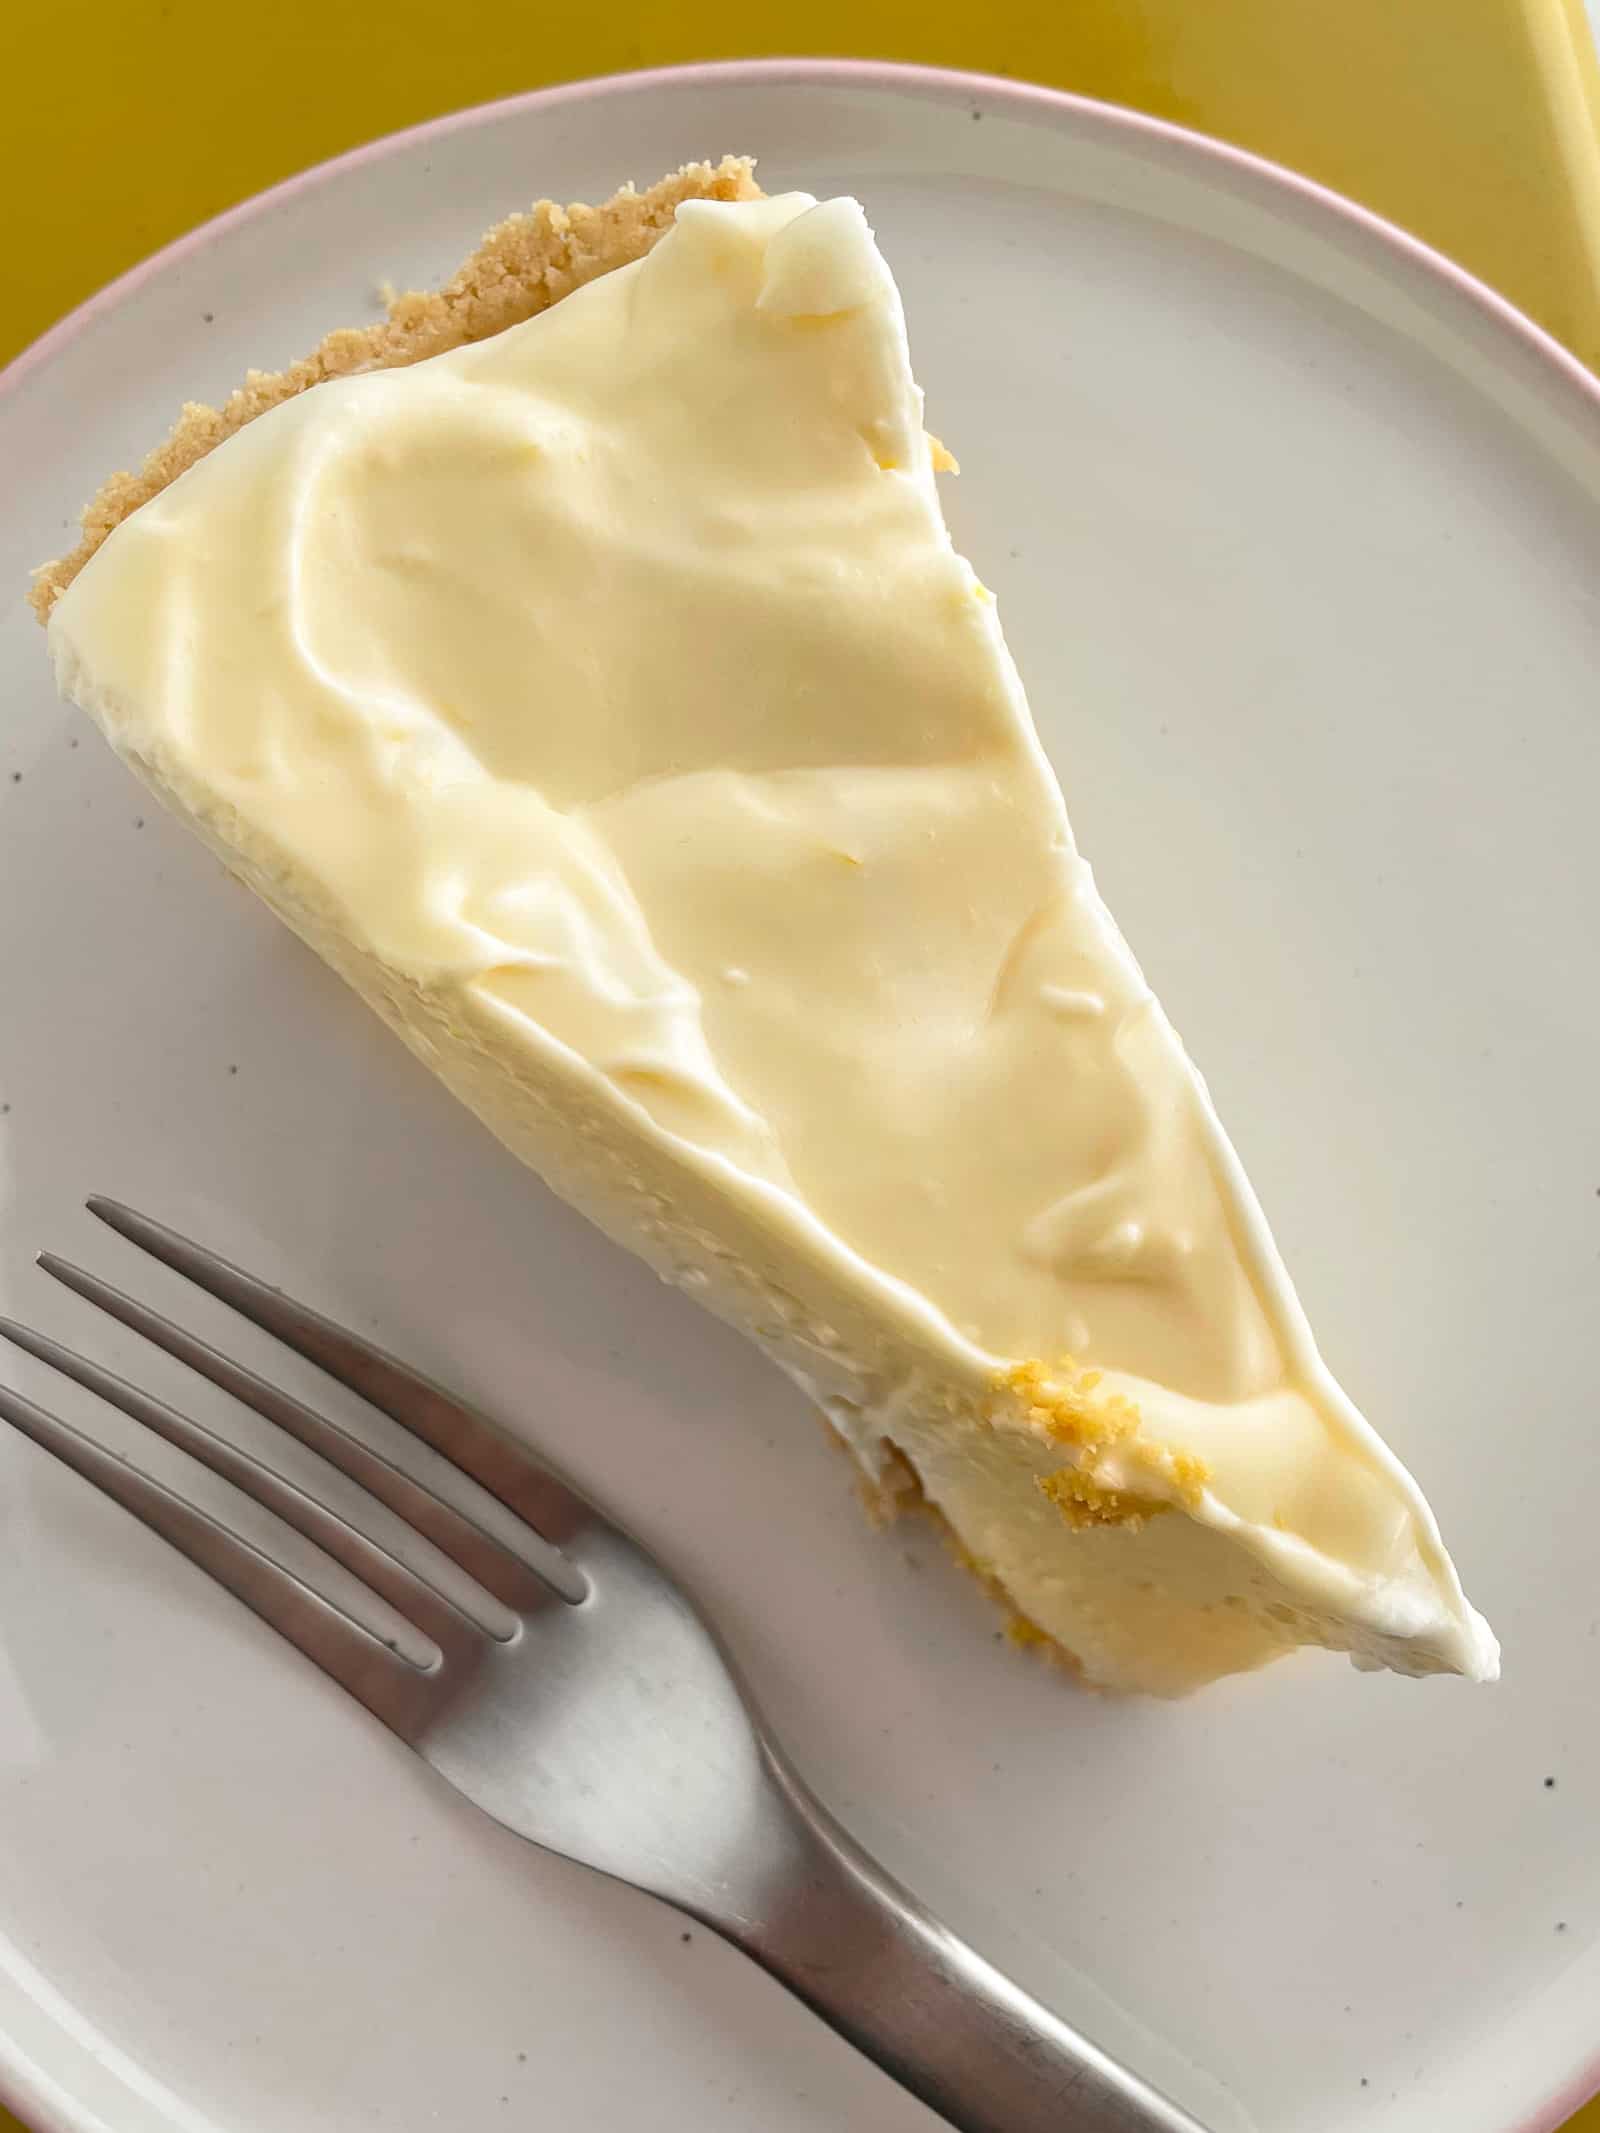 A slice of no-bake lemon pie on a plate.